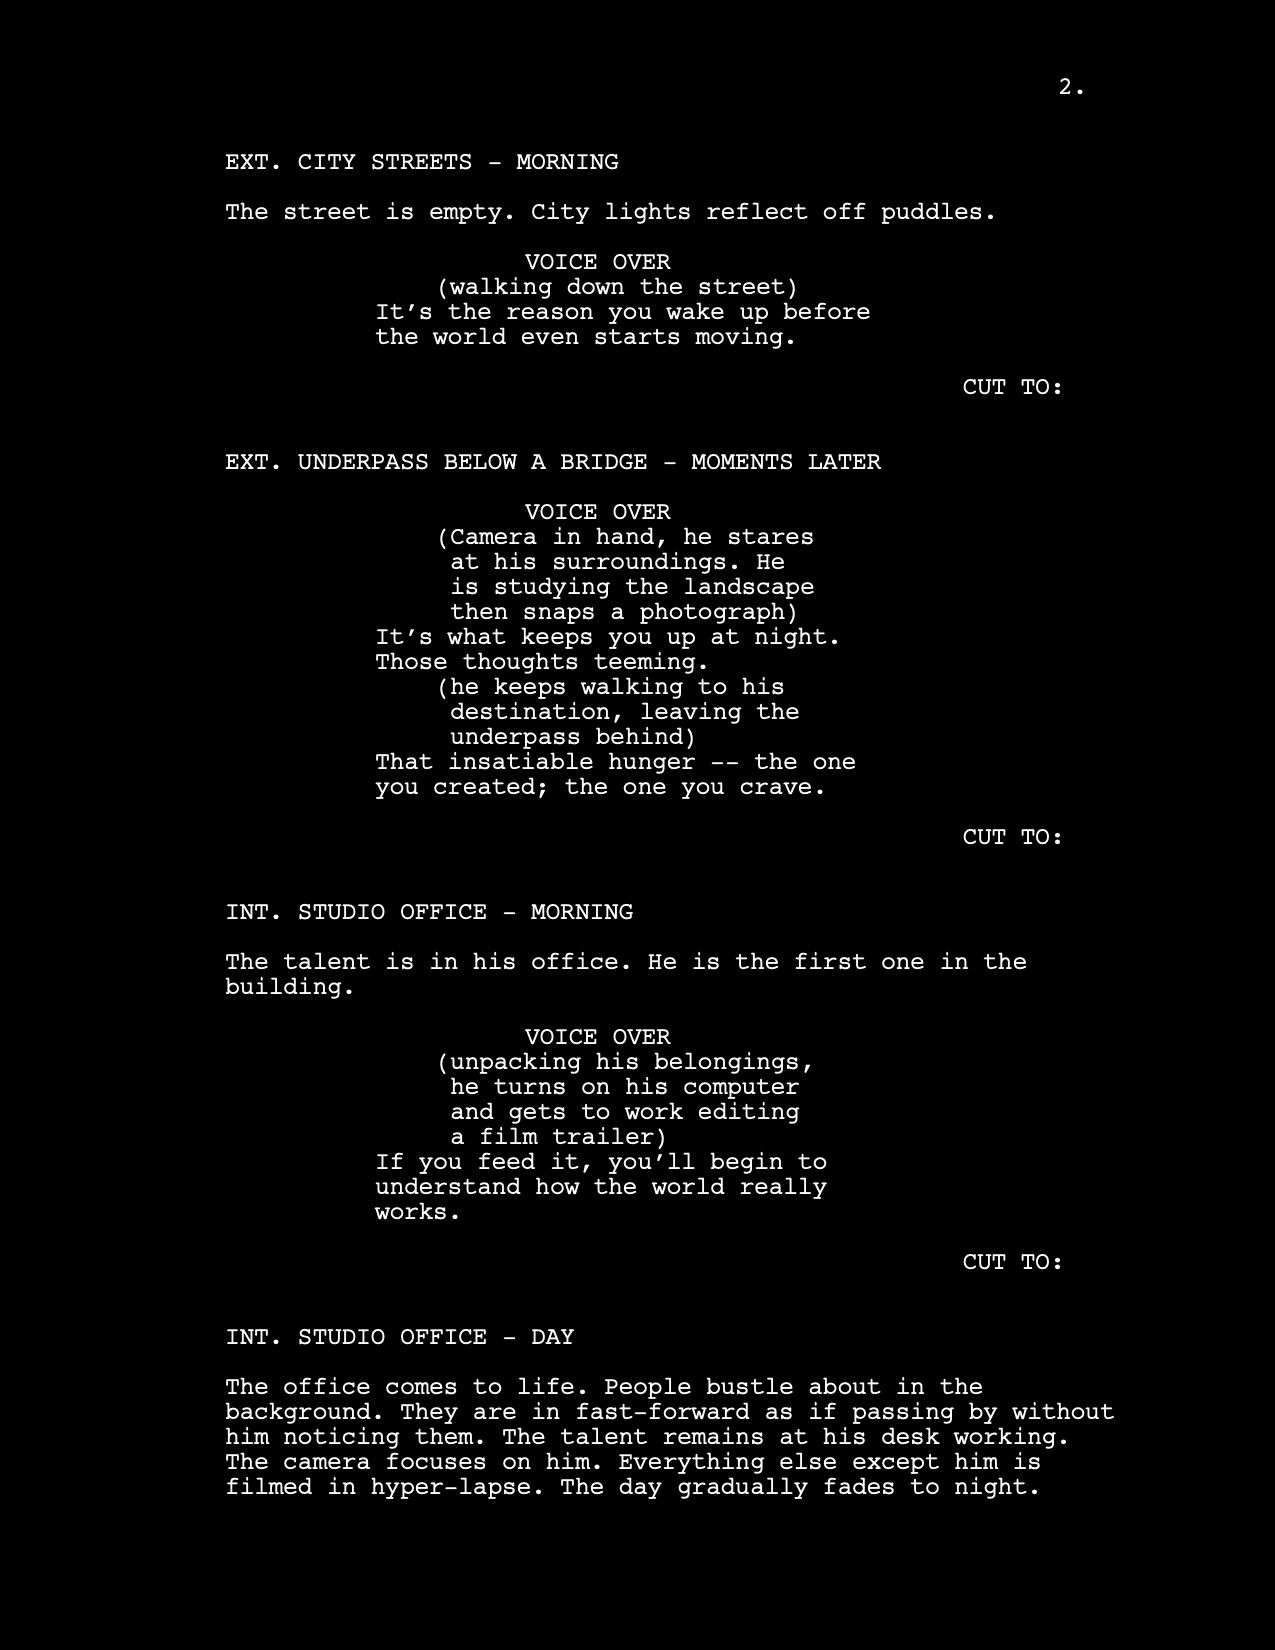 IU C&I Studios Page The X Campaign black script